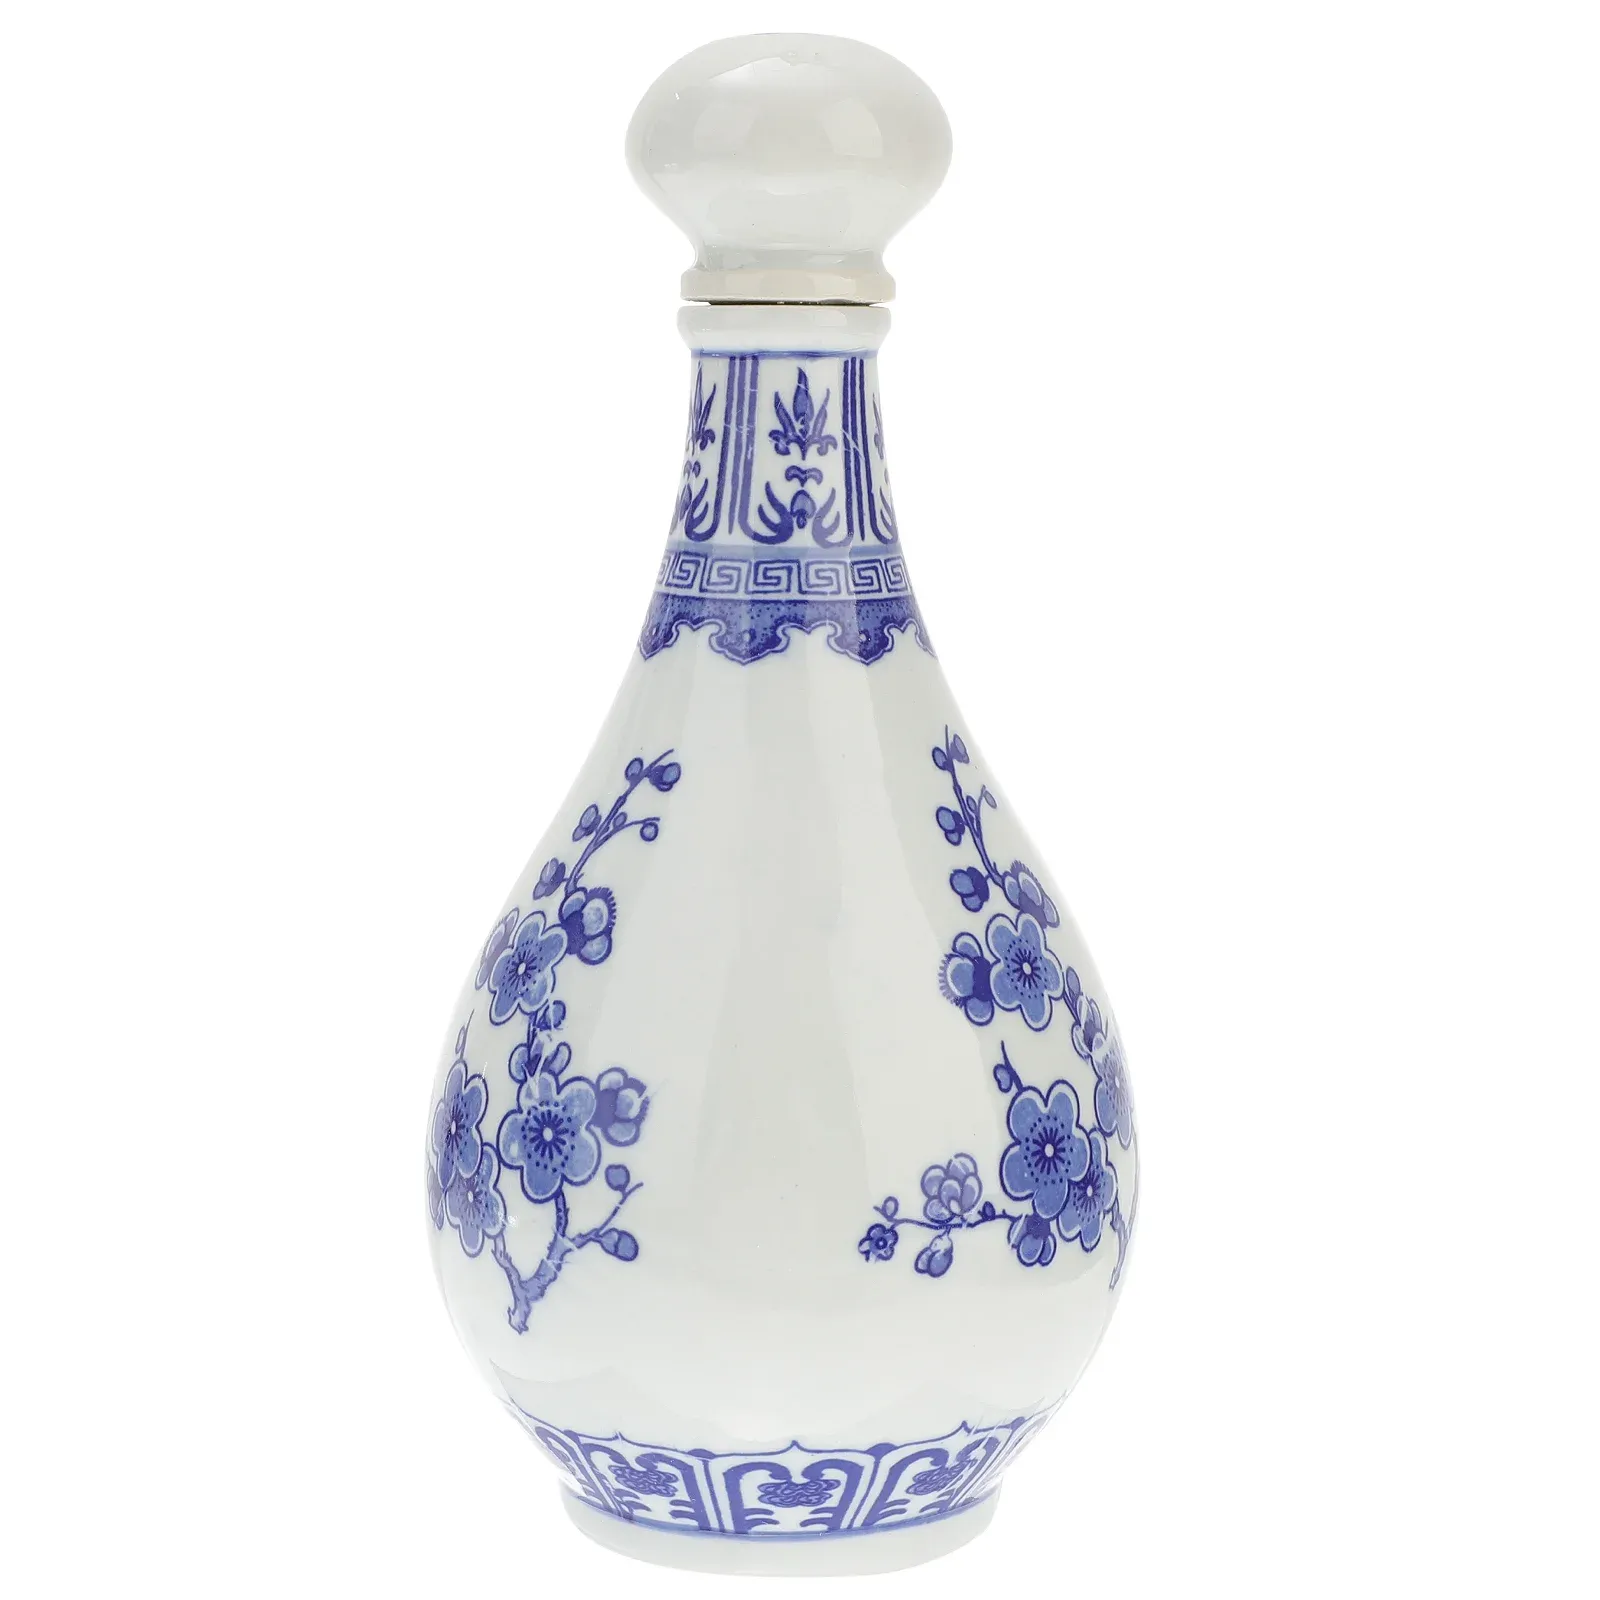 Vases Bottle Chinese Sake Ceramic Pot Jar Jug White Blue Japanese Container Porcelain Vintage Flask Cruet Gourd Retro Tokkuri Serving